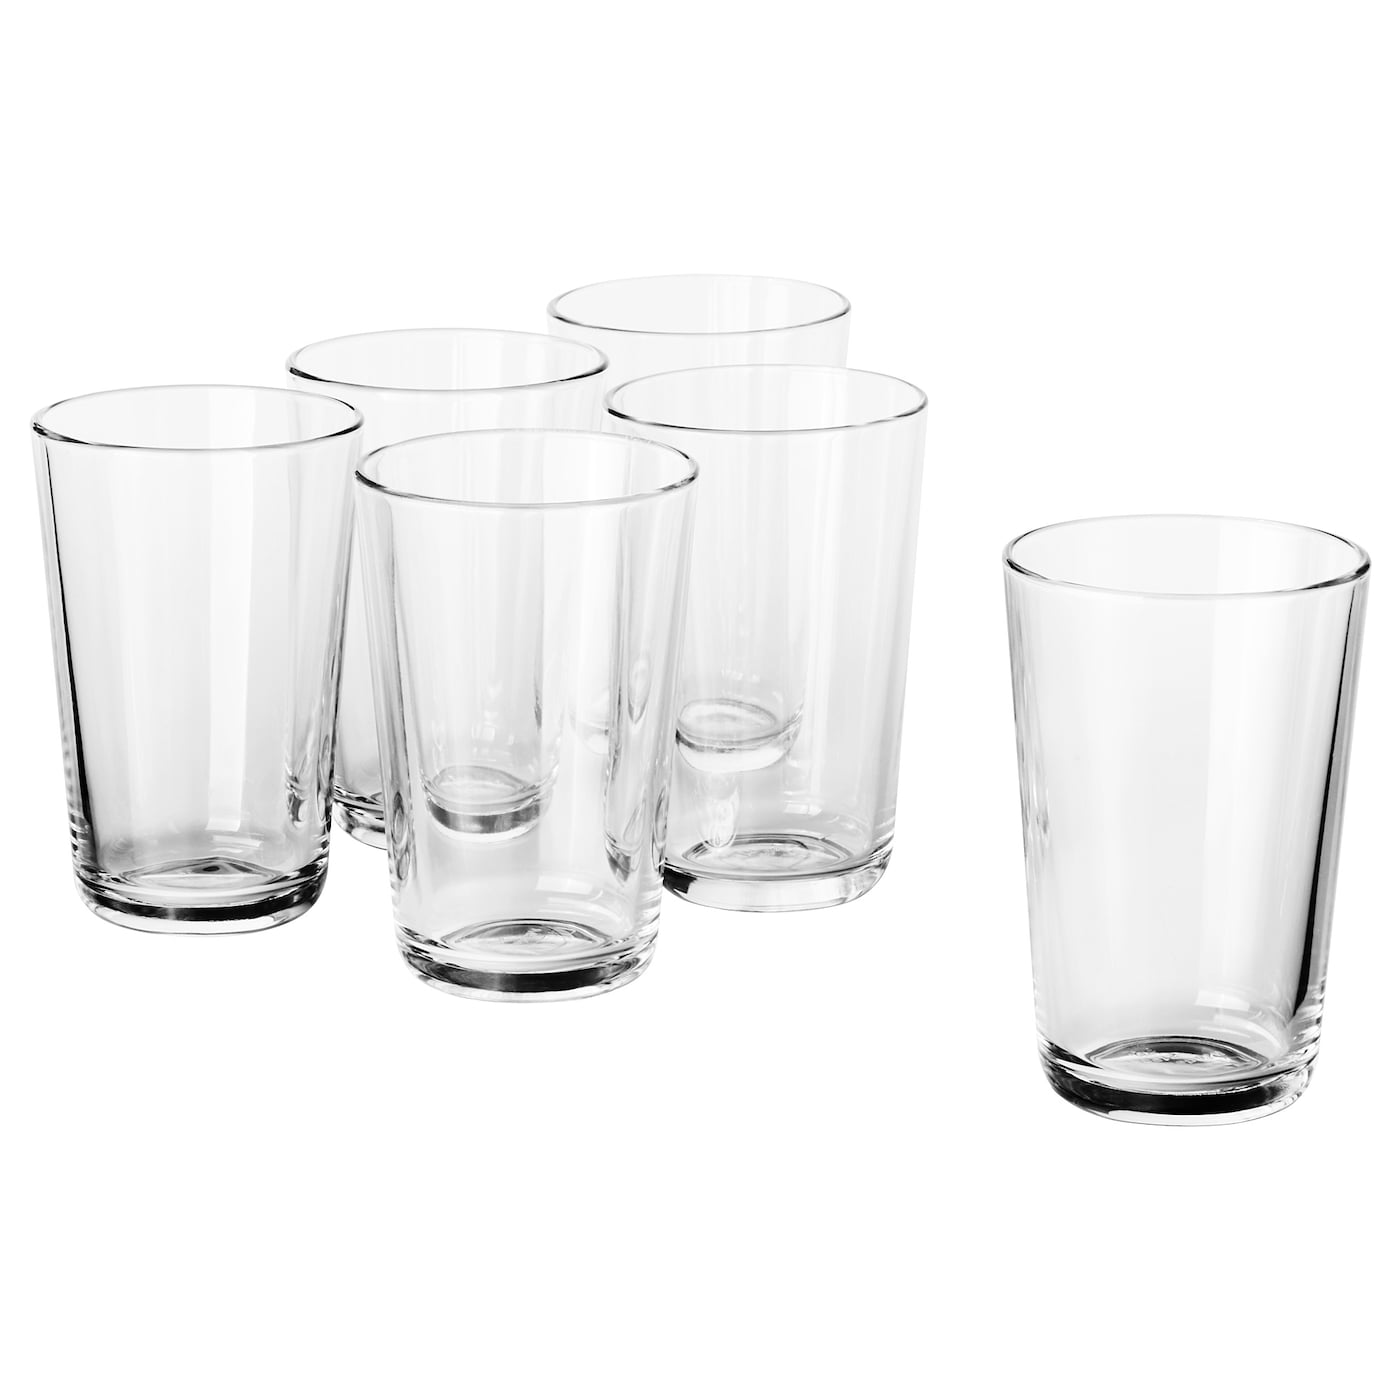 Набор стаканов, 6 шт. - IKEA 365+, 300 мл, прозрачное стекло, ИКЕА 365+